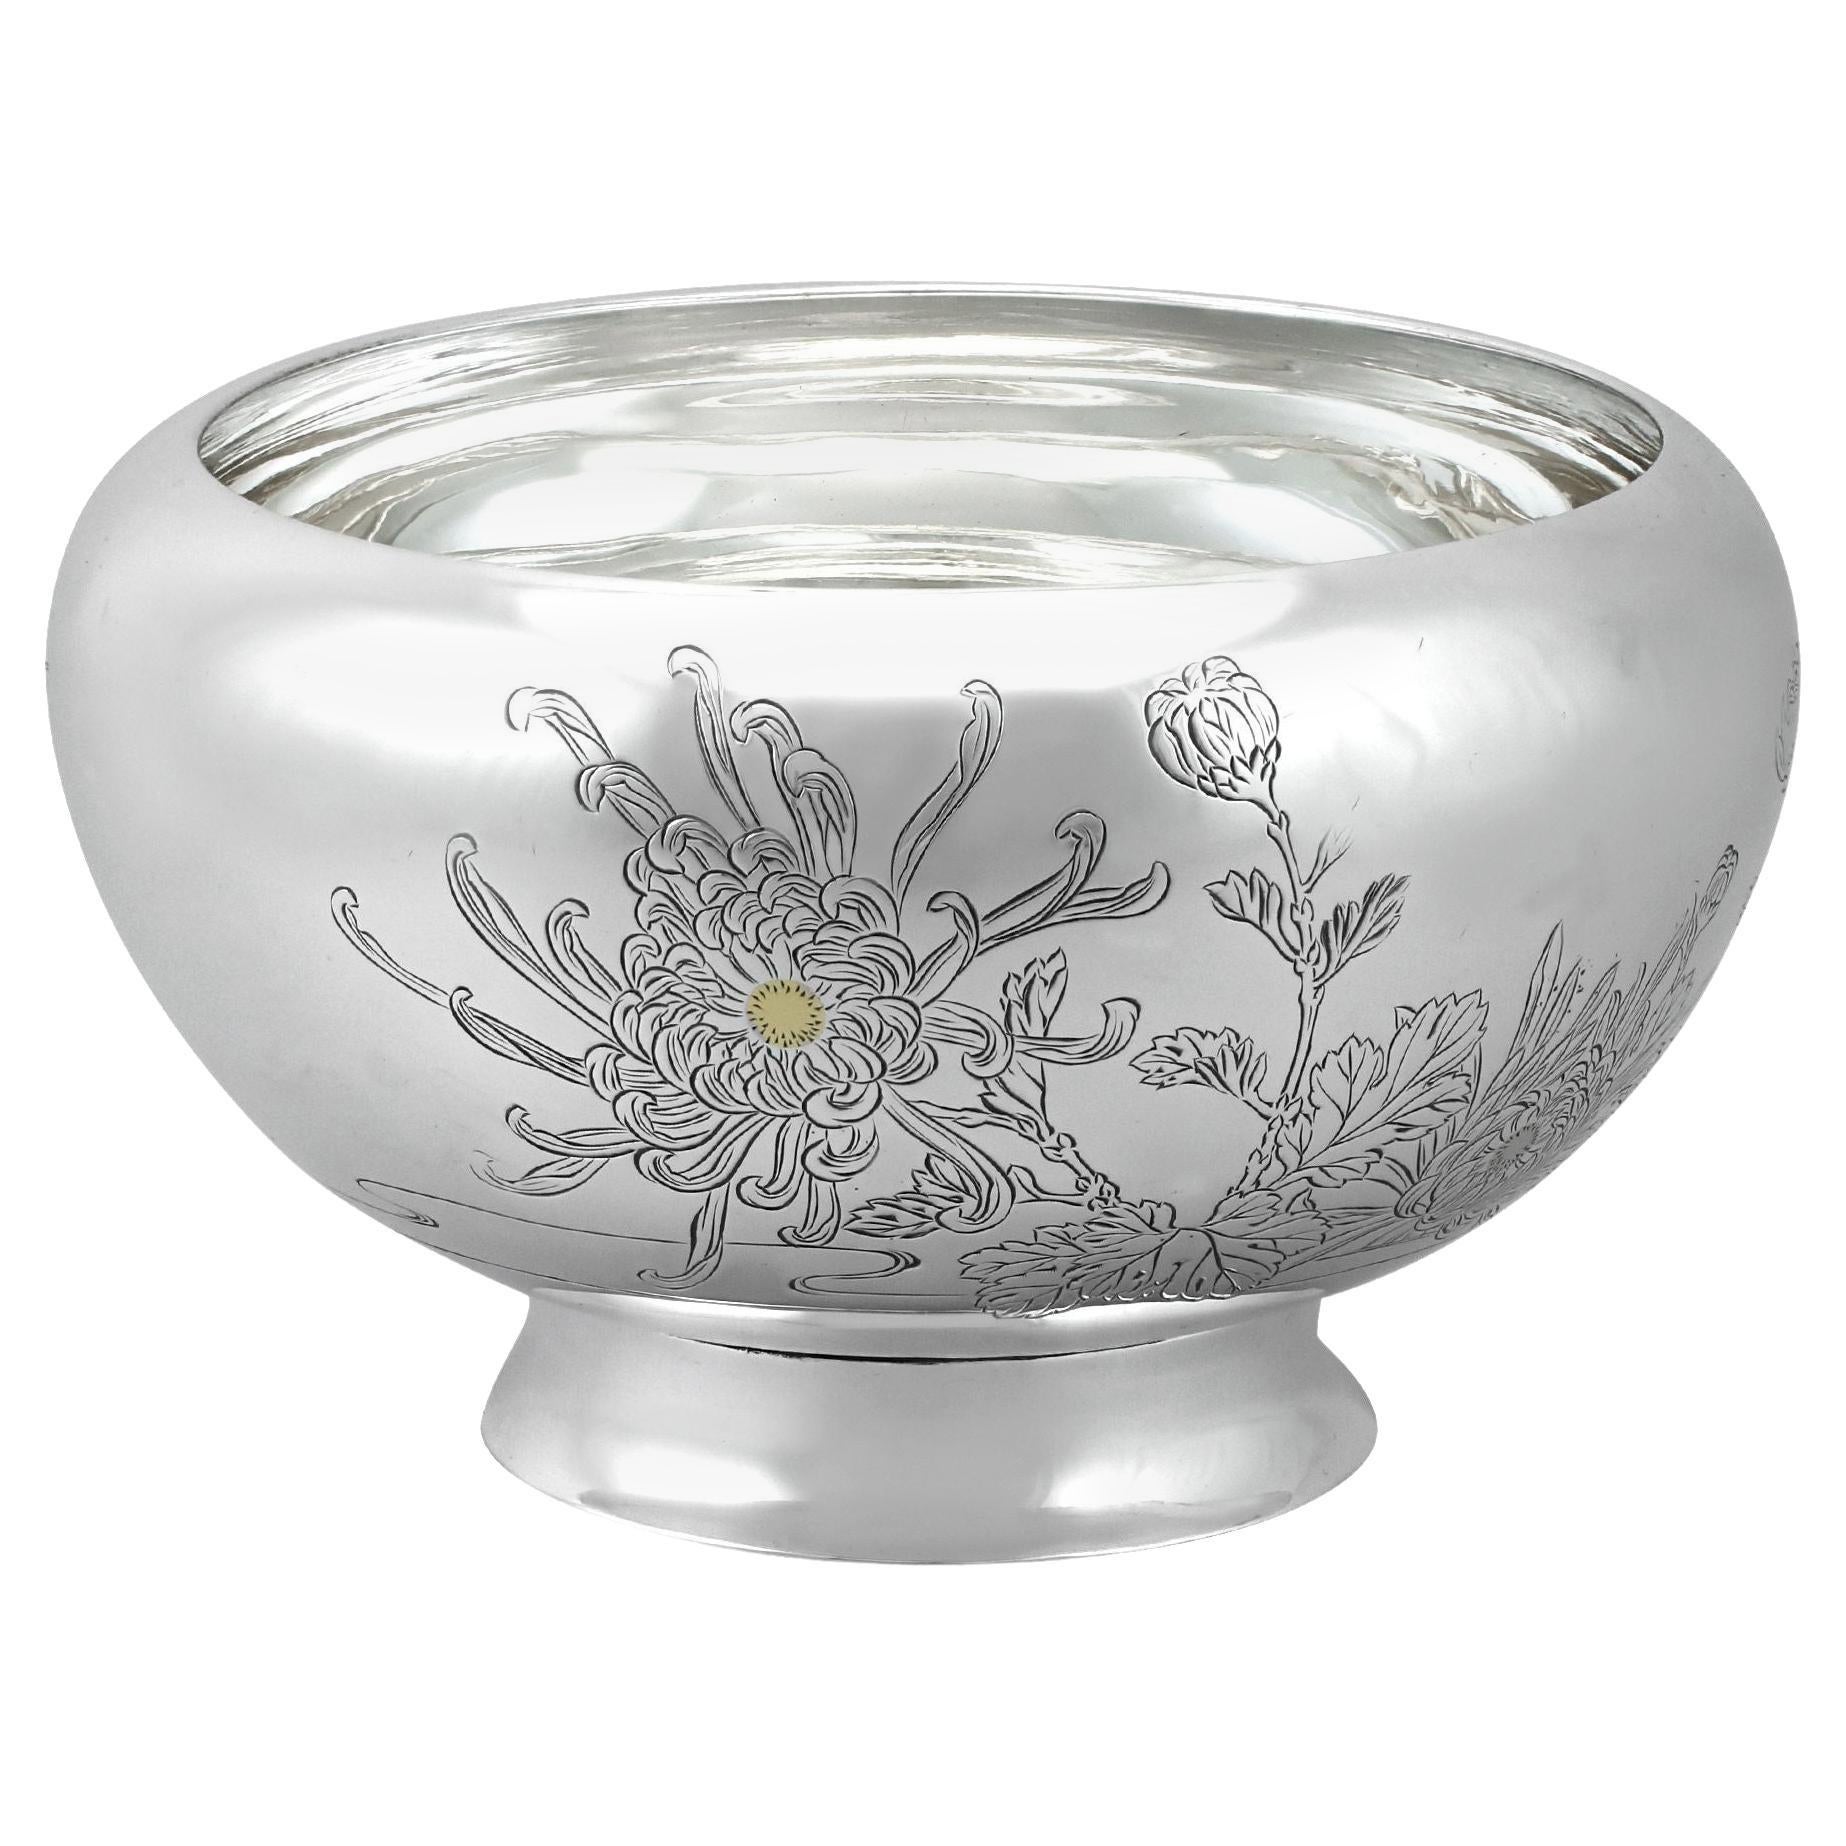 Antique Japanese Silver Serving Bowl For Sale